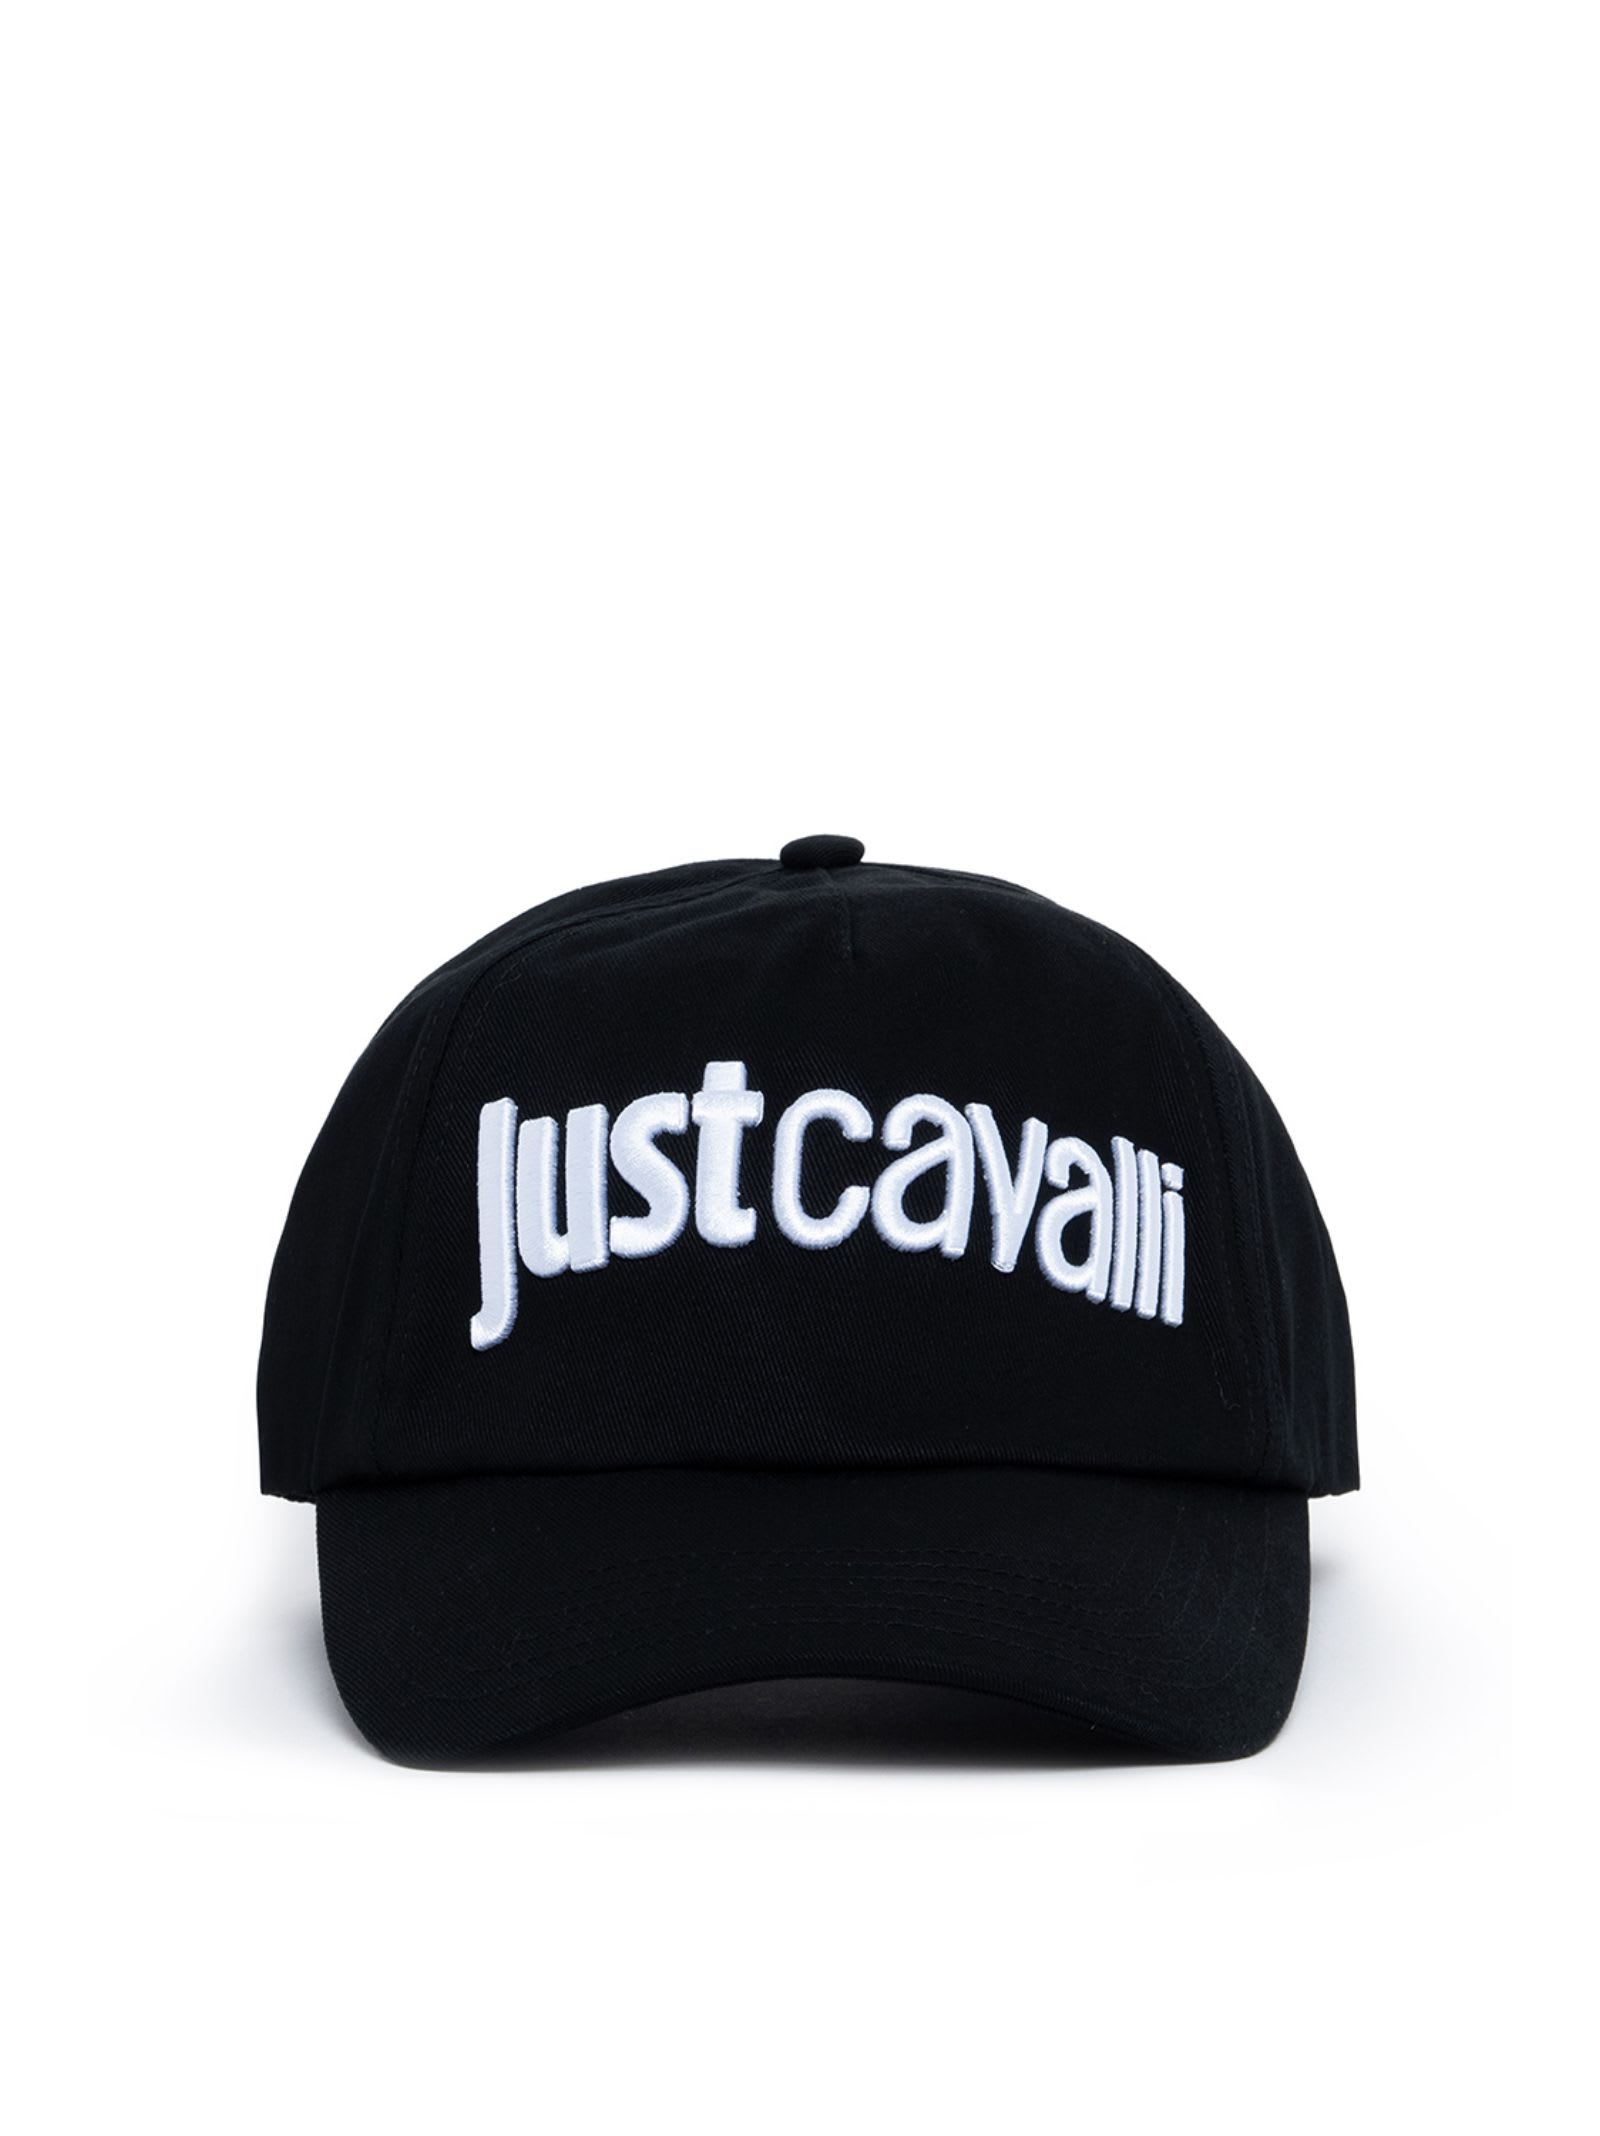 Roberto Cavalli Just Cavalli Hat In Black/white